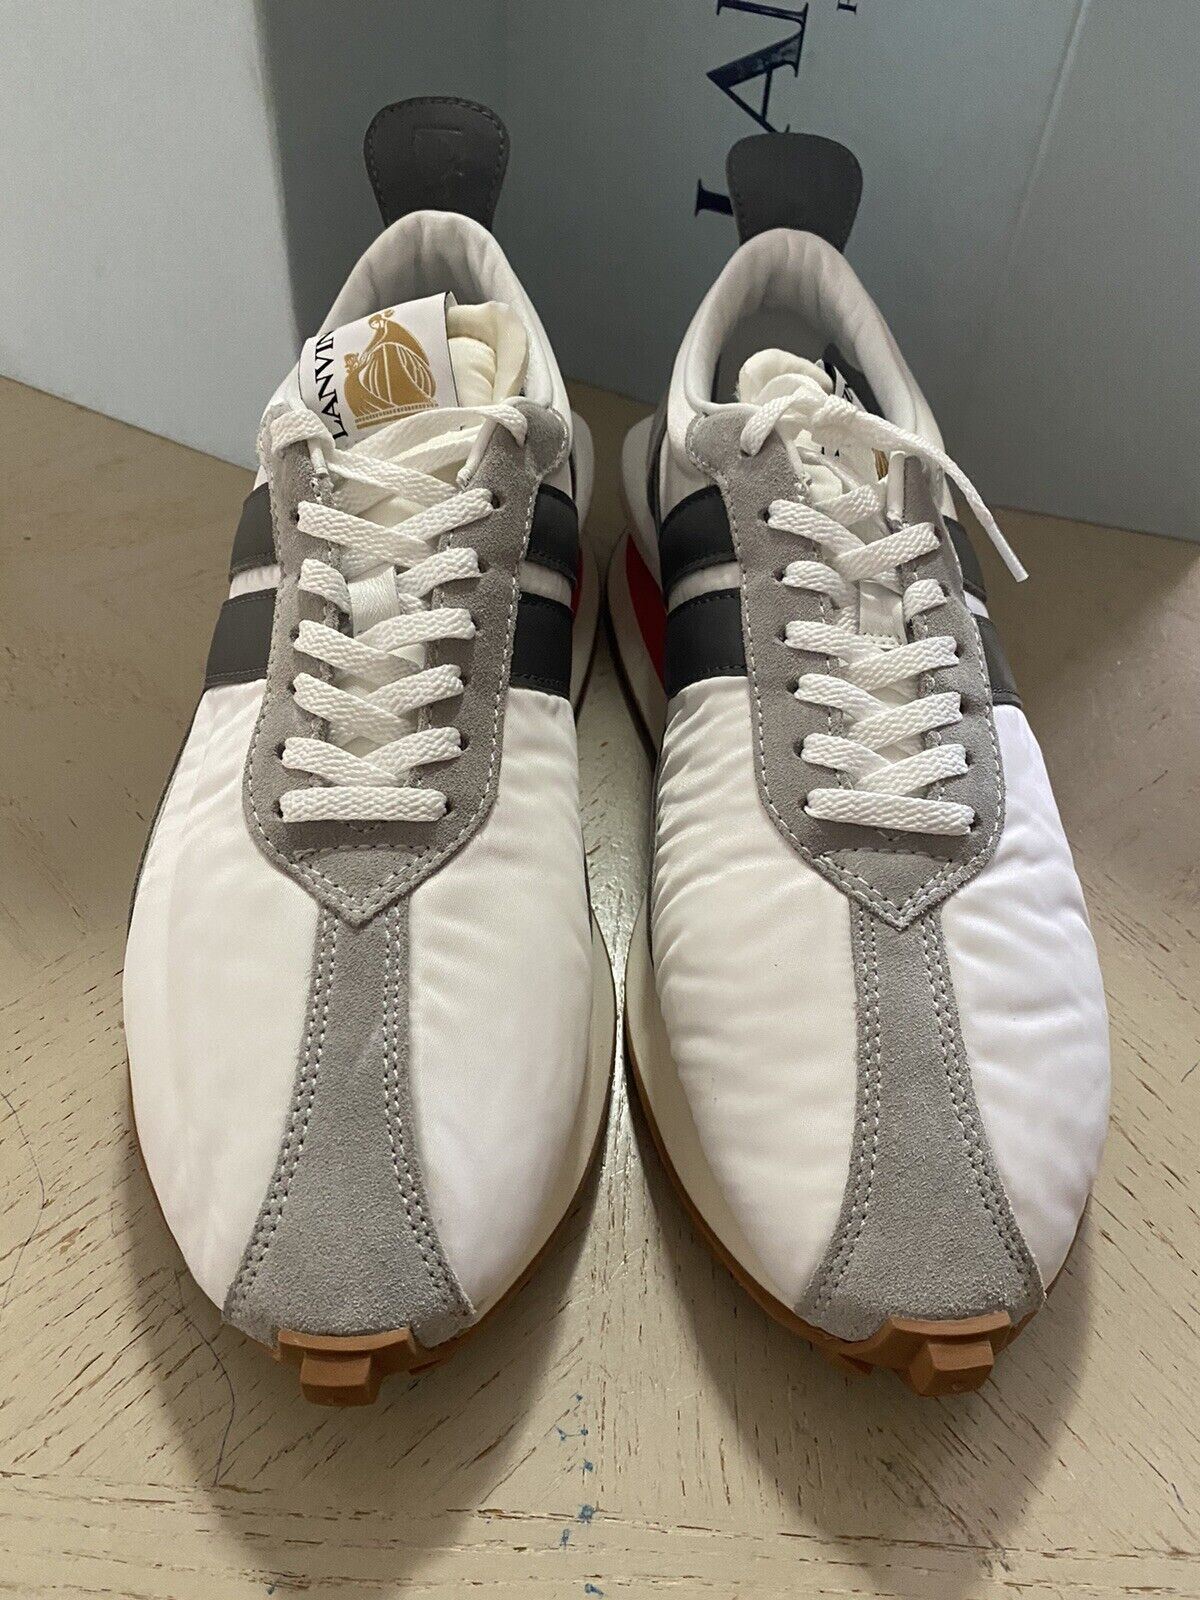 New Lanvin Men’s Nylon/Suede BumpR Sneakers Shoes White/Gray 13 US/46 Eu